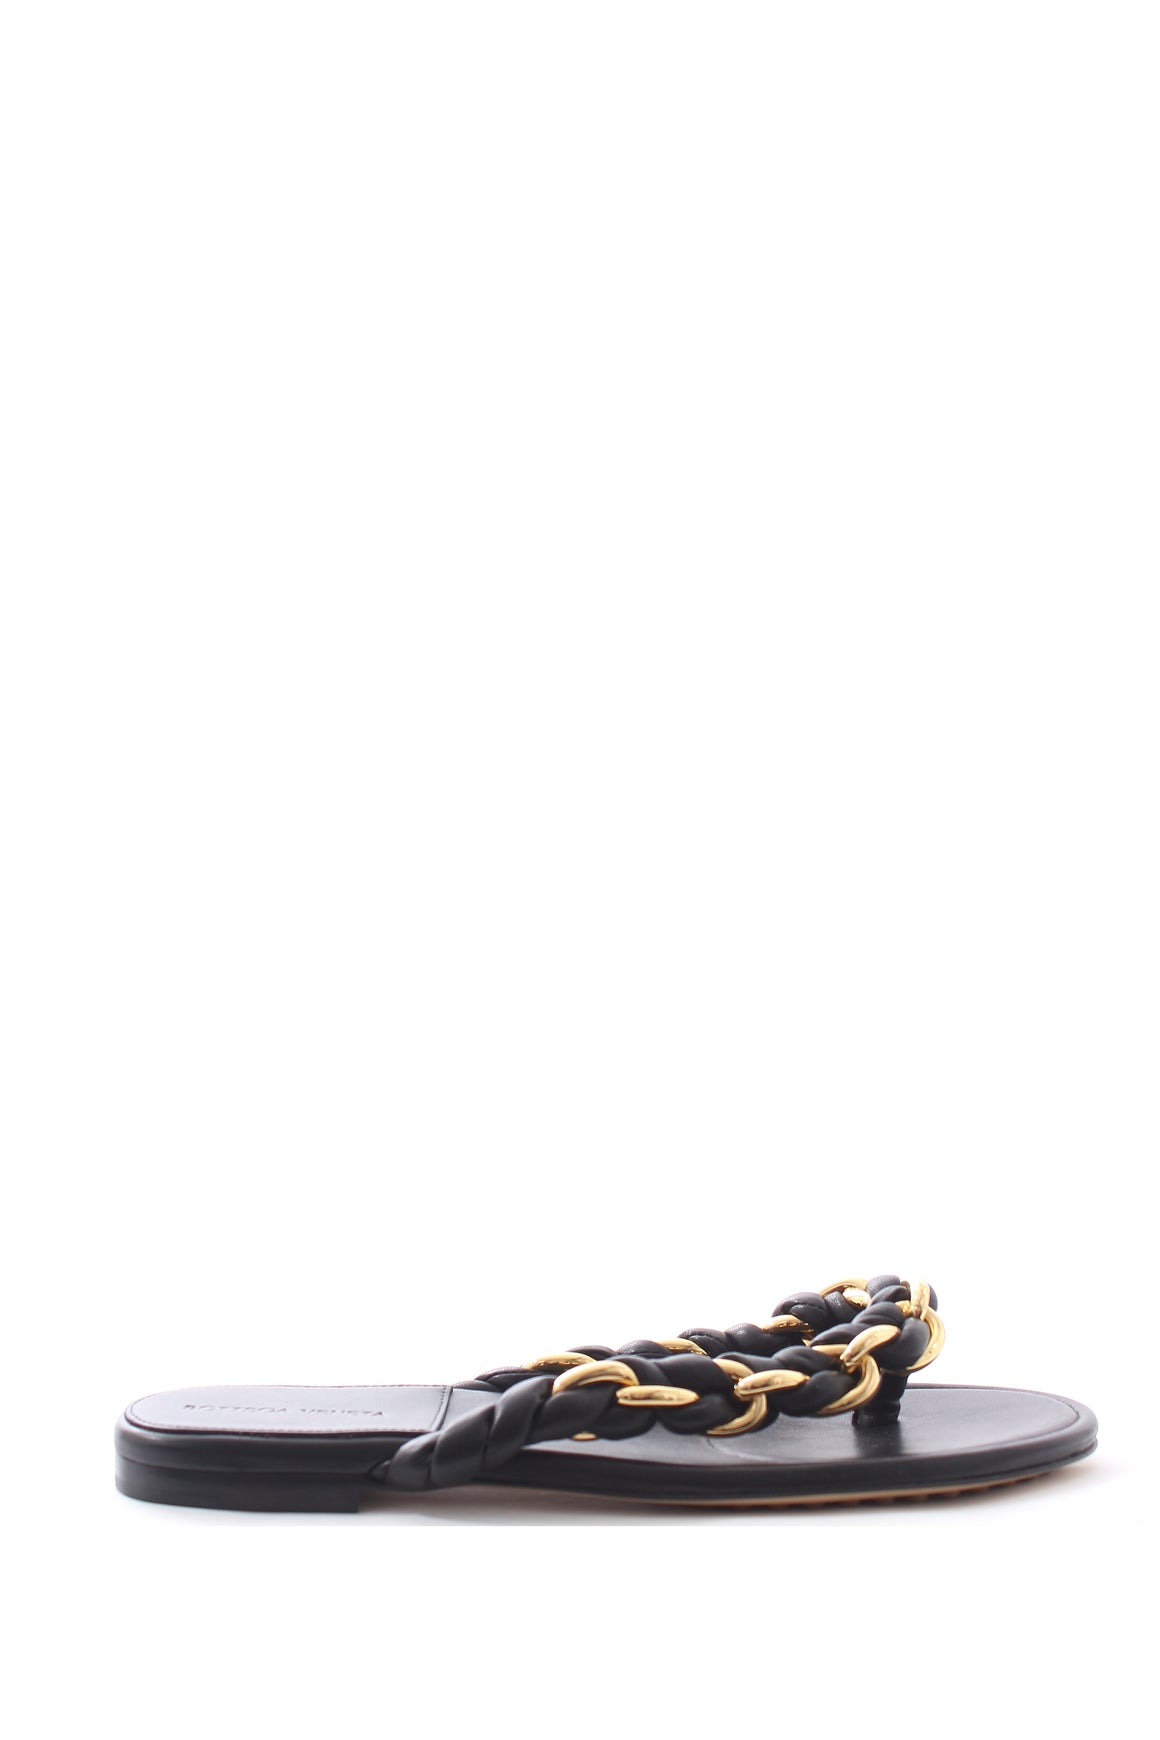 Bottega Veneta Dot Leather and Chain Sandals - Current Season